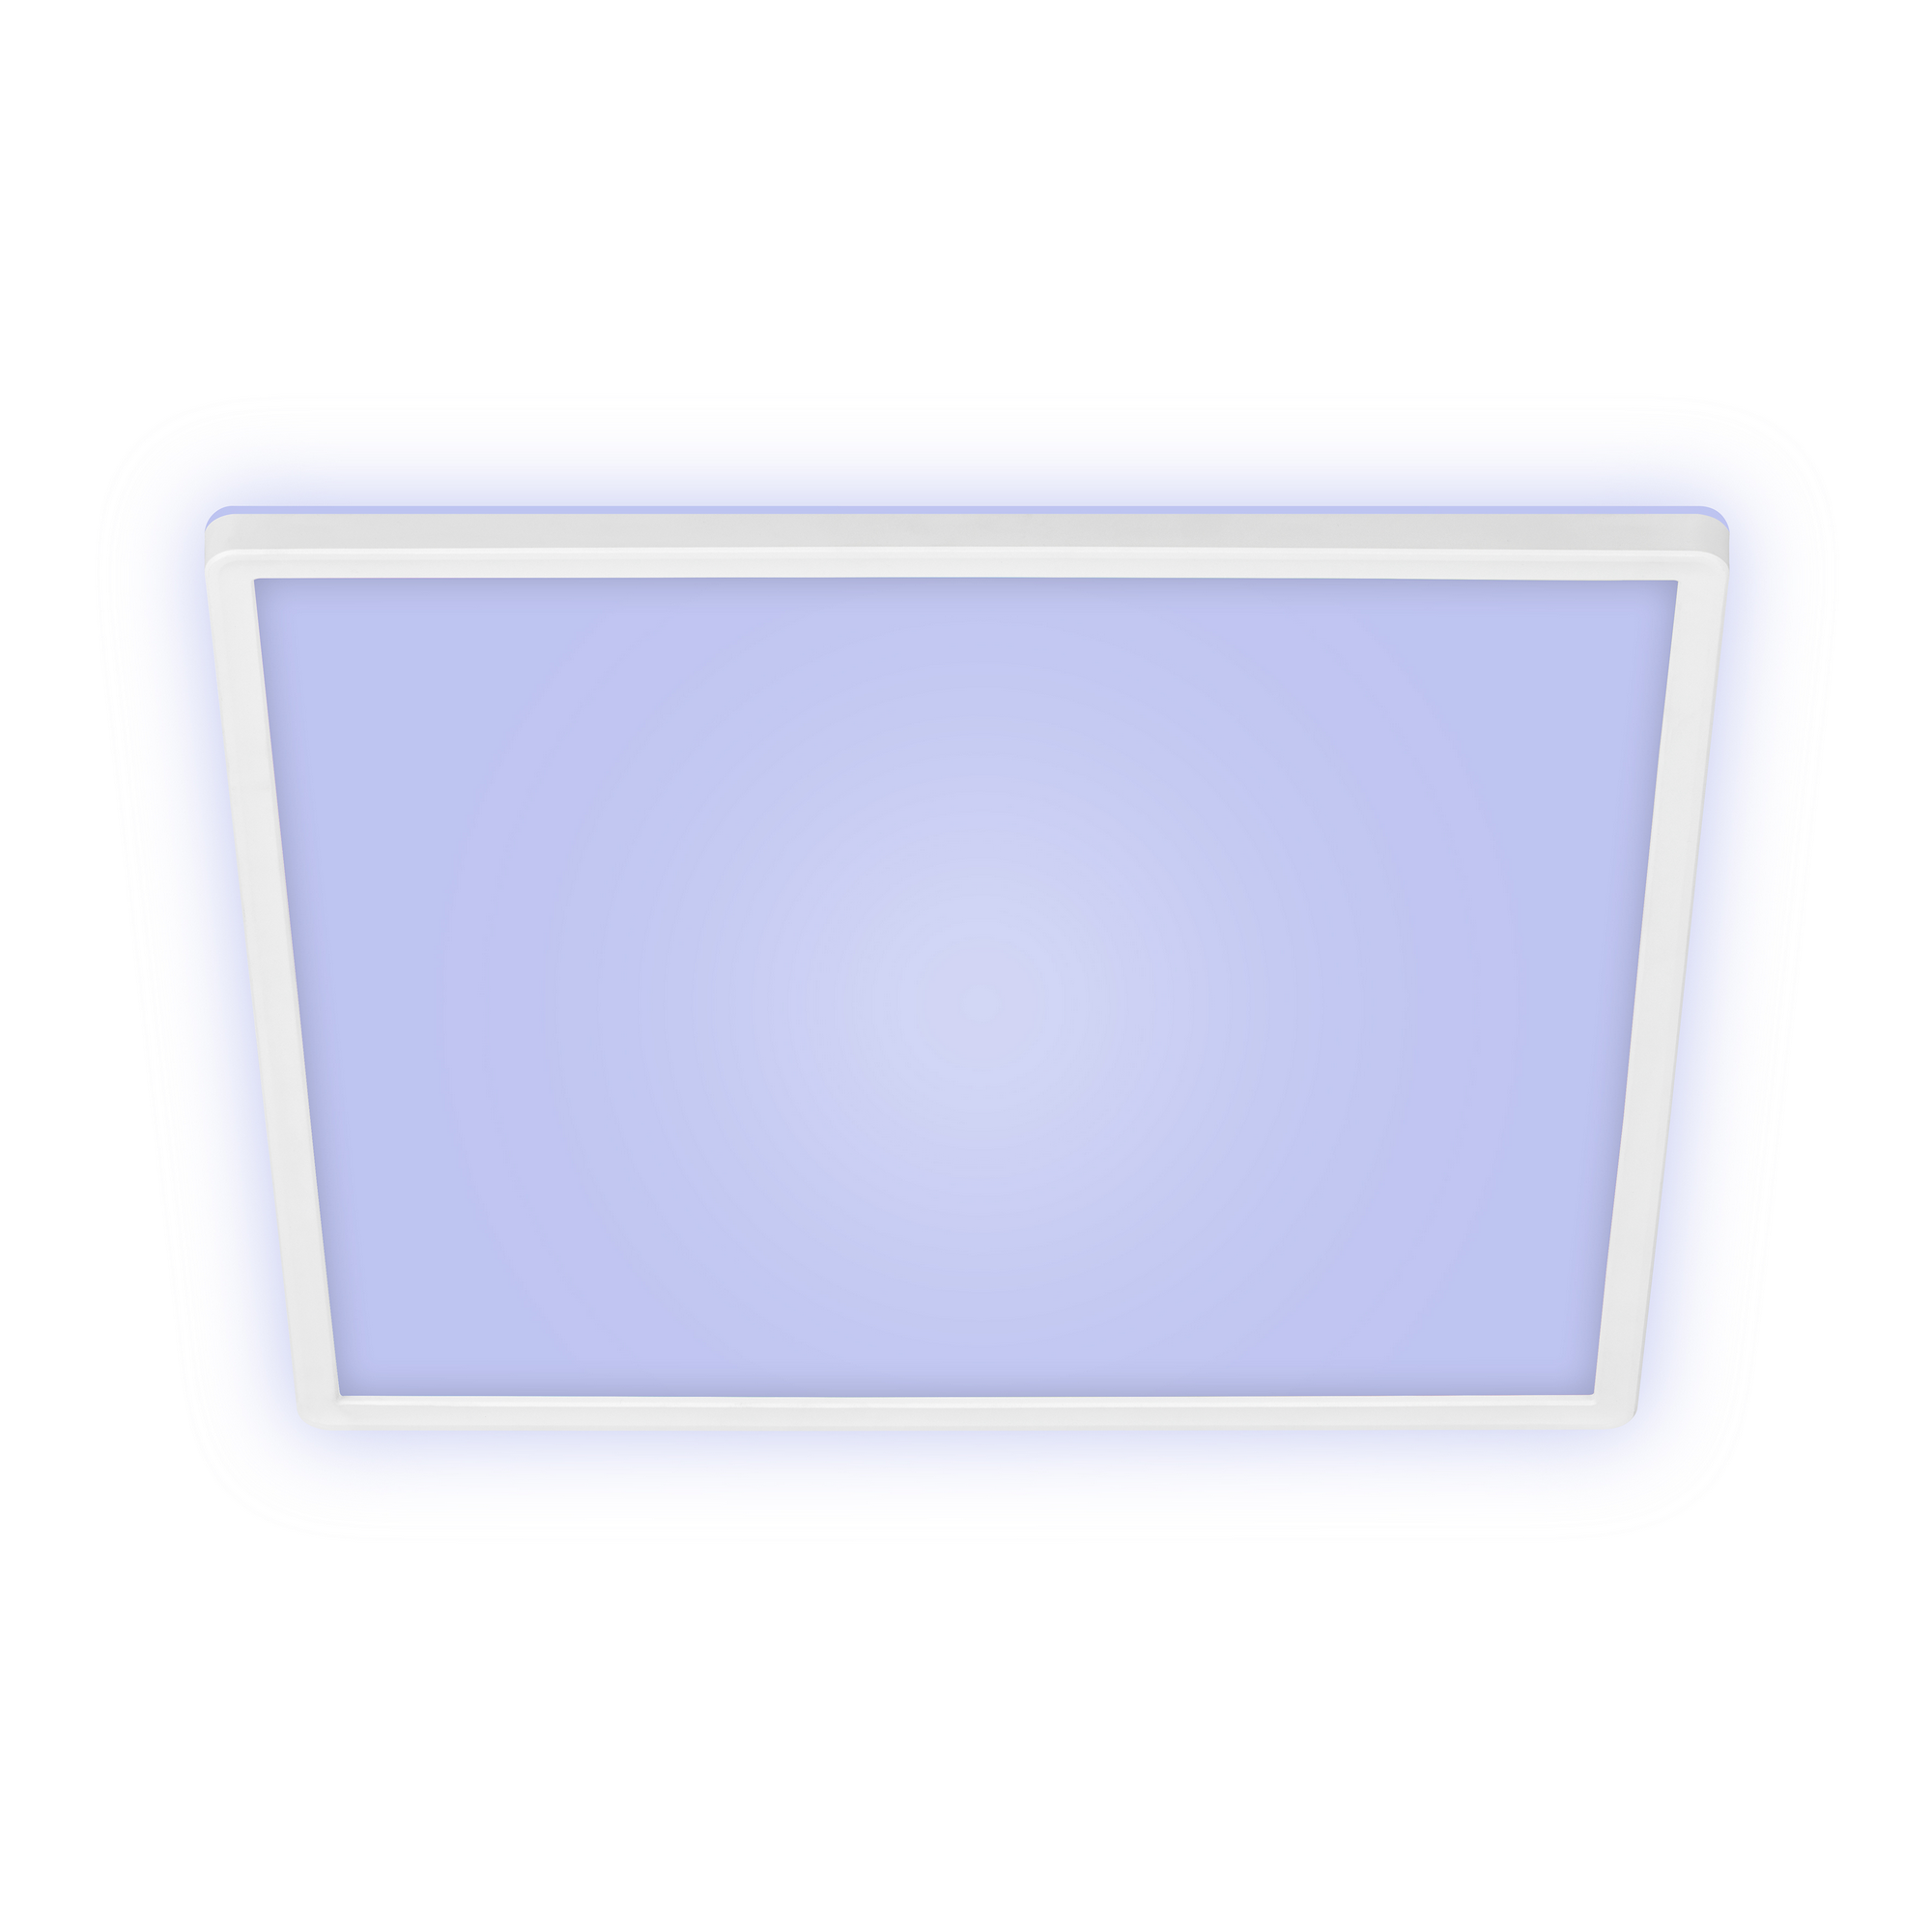 LED-Panel 'Slim' weiß 42 x 42 x 2,8 cm, mit RGB-Farbwechsel + product picture